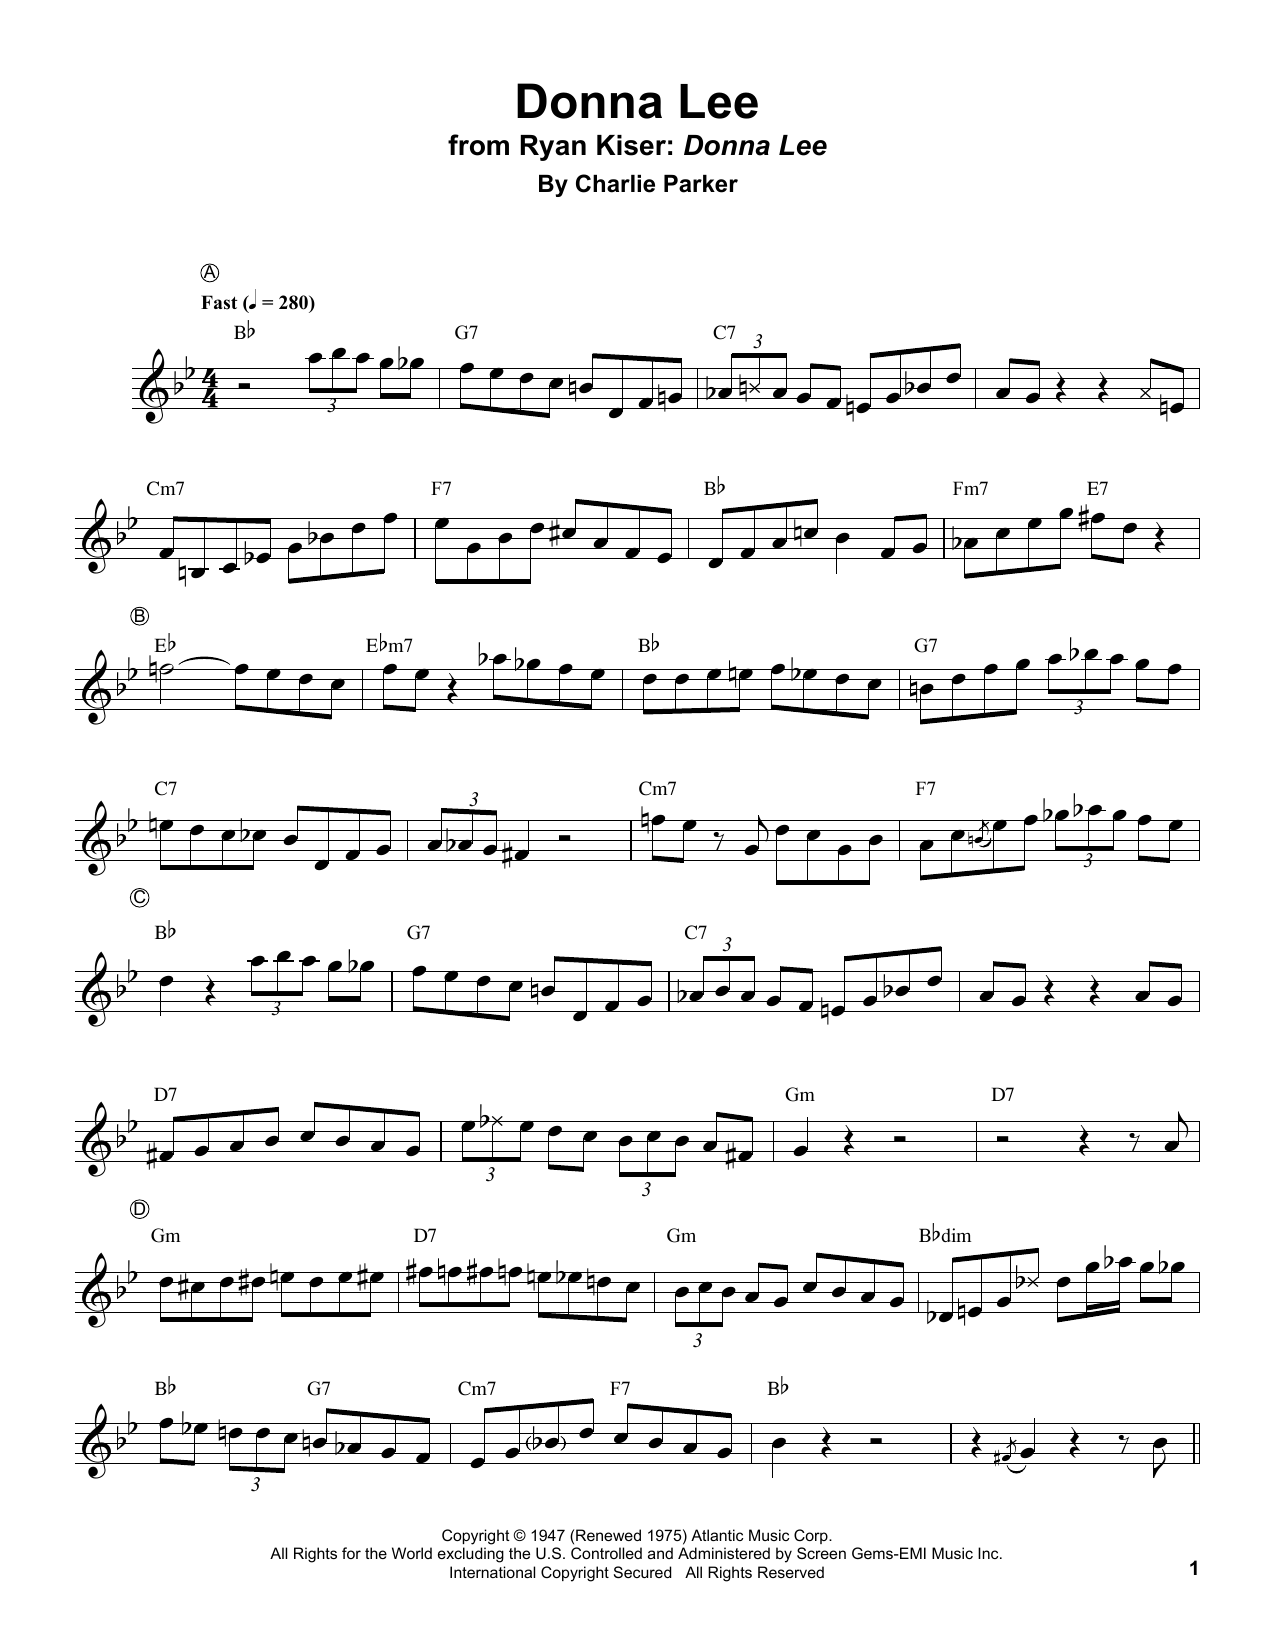 Ryan Kisor Donna Lee Sheet Music Notes & Chords for Trumpet Transcription - Download or Print PDF